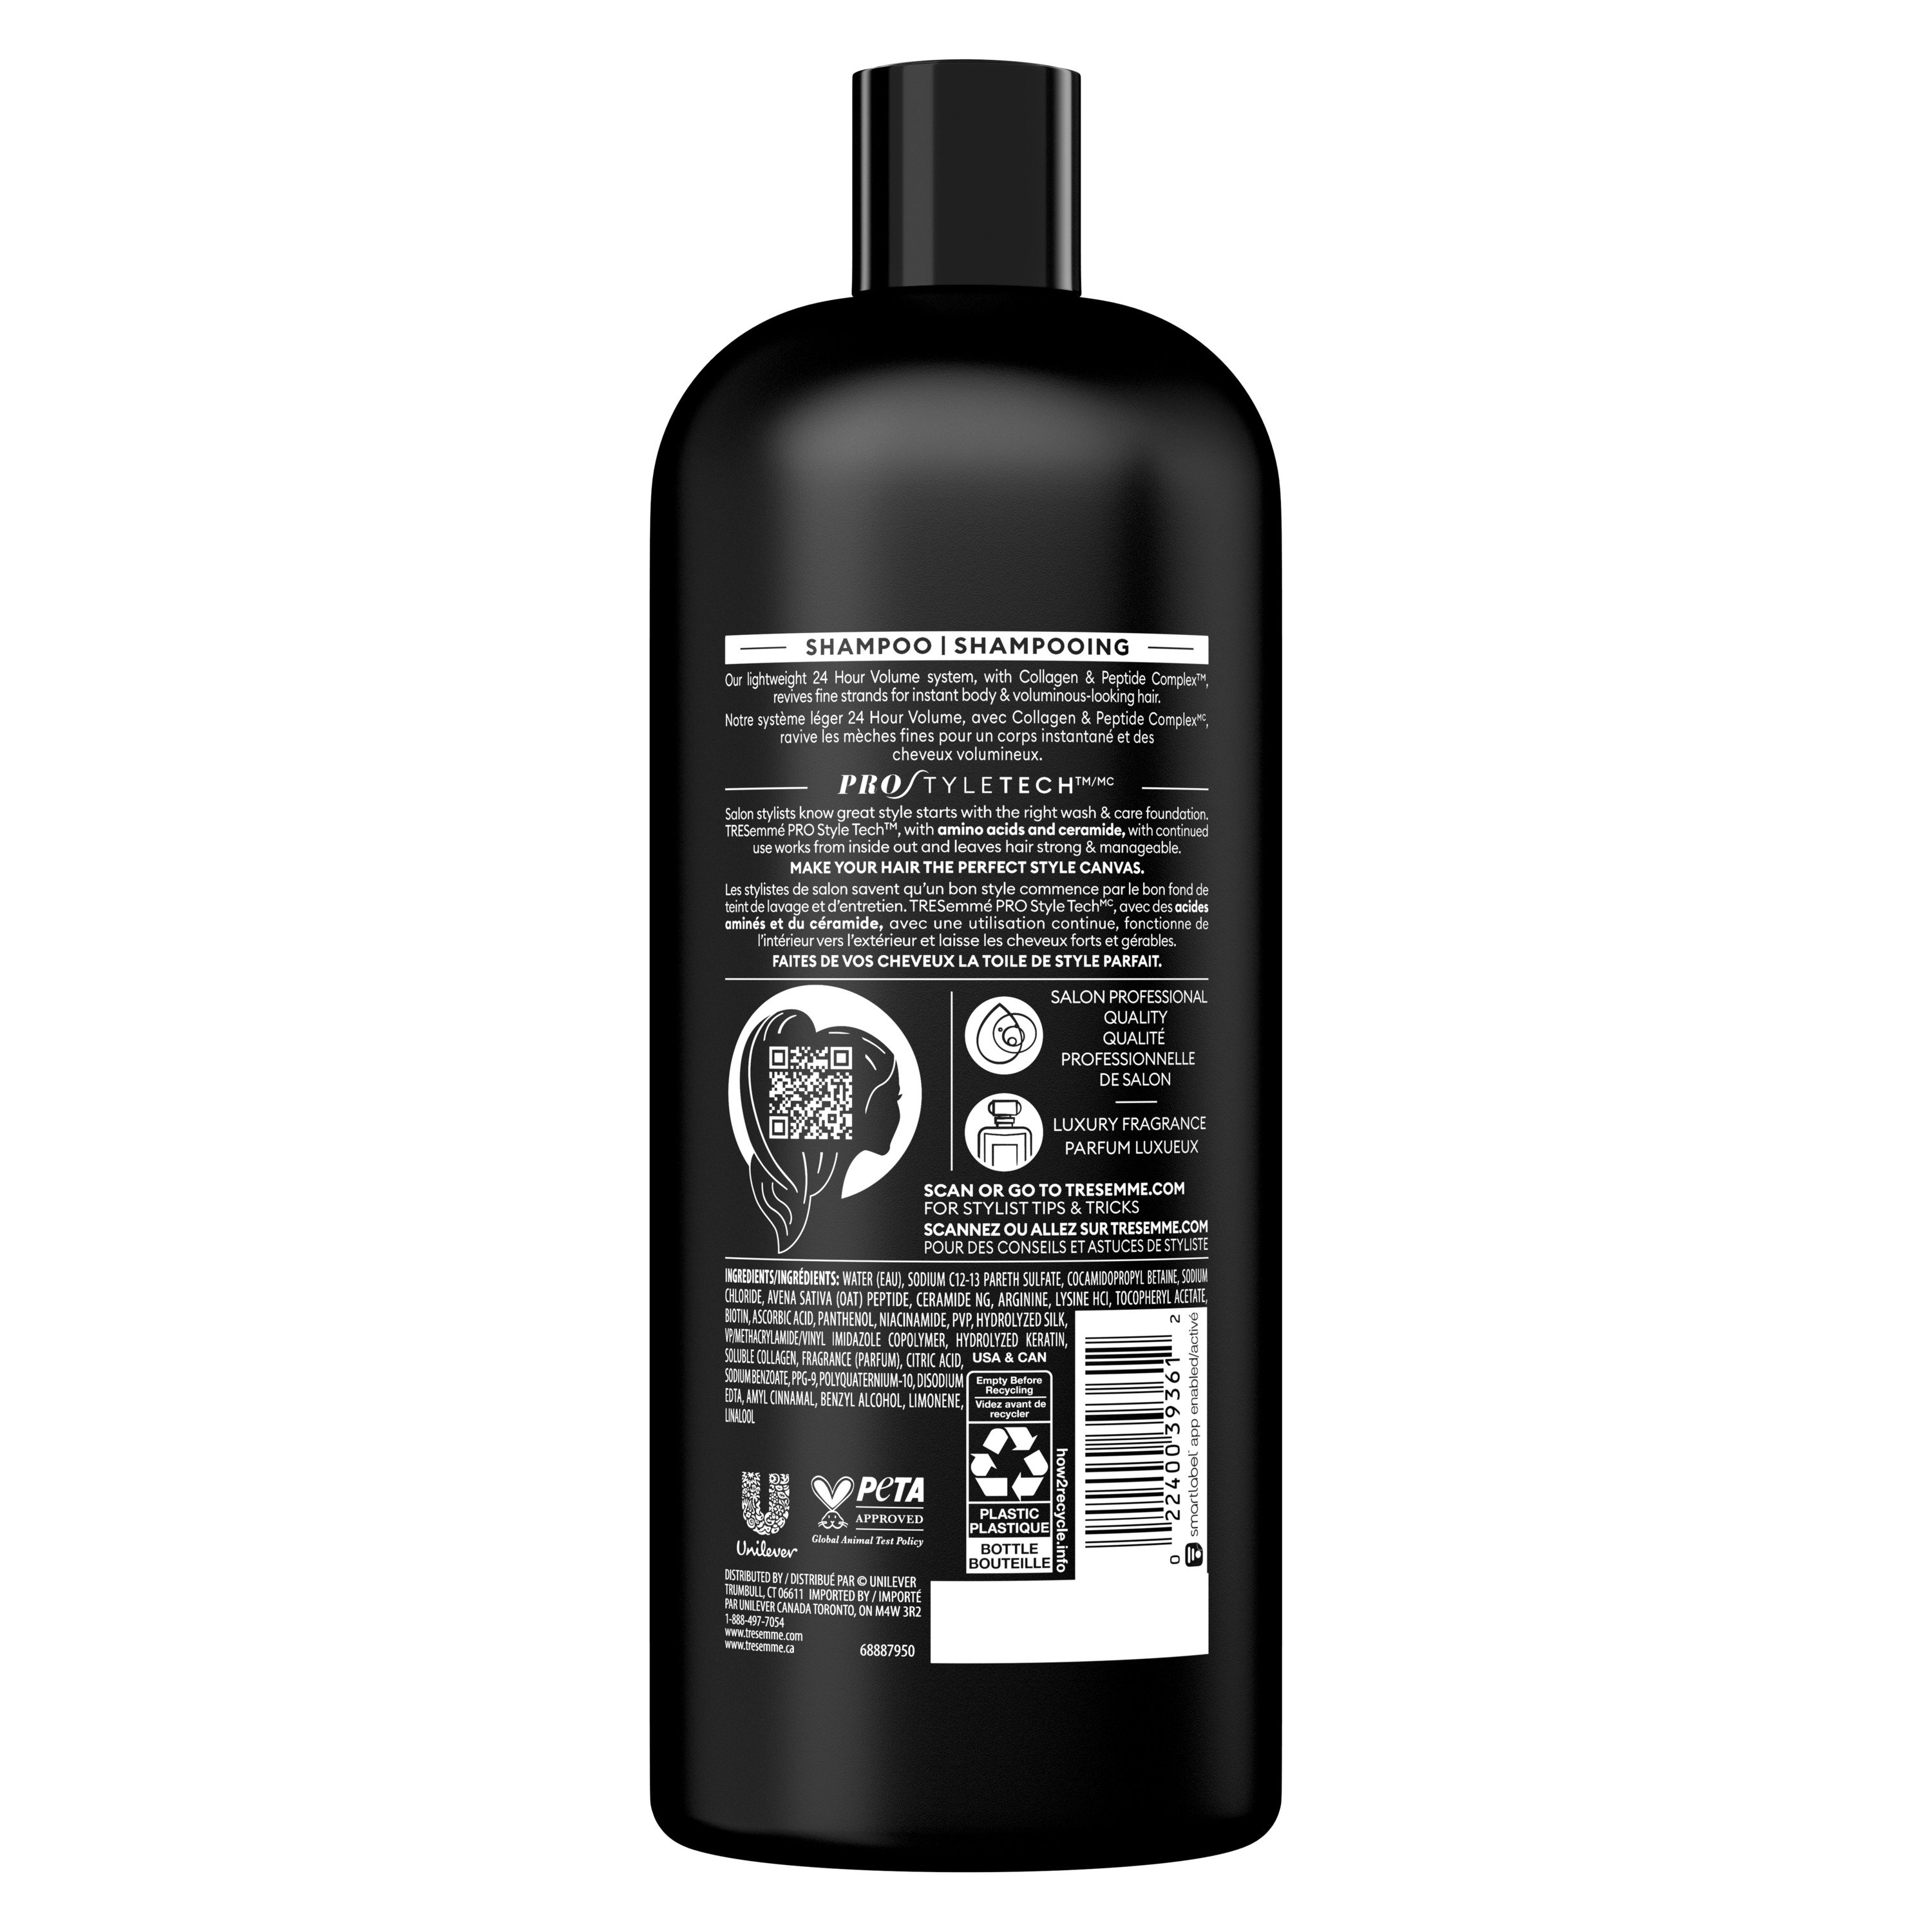 Pro Solutions 24 Hour Volume Thickening Shampoo - Shop Shampoo & at H-E-B